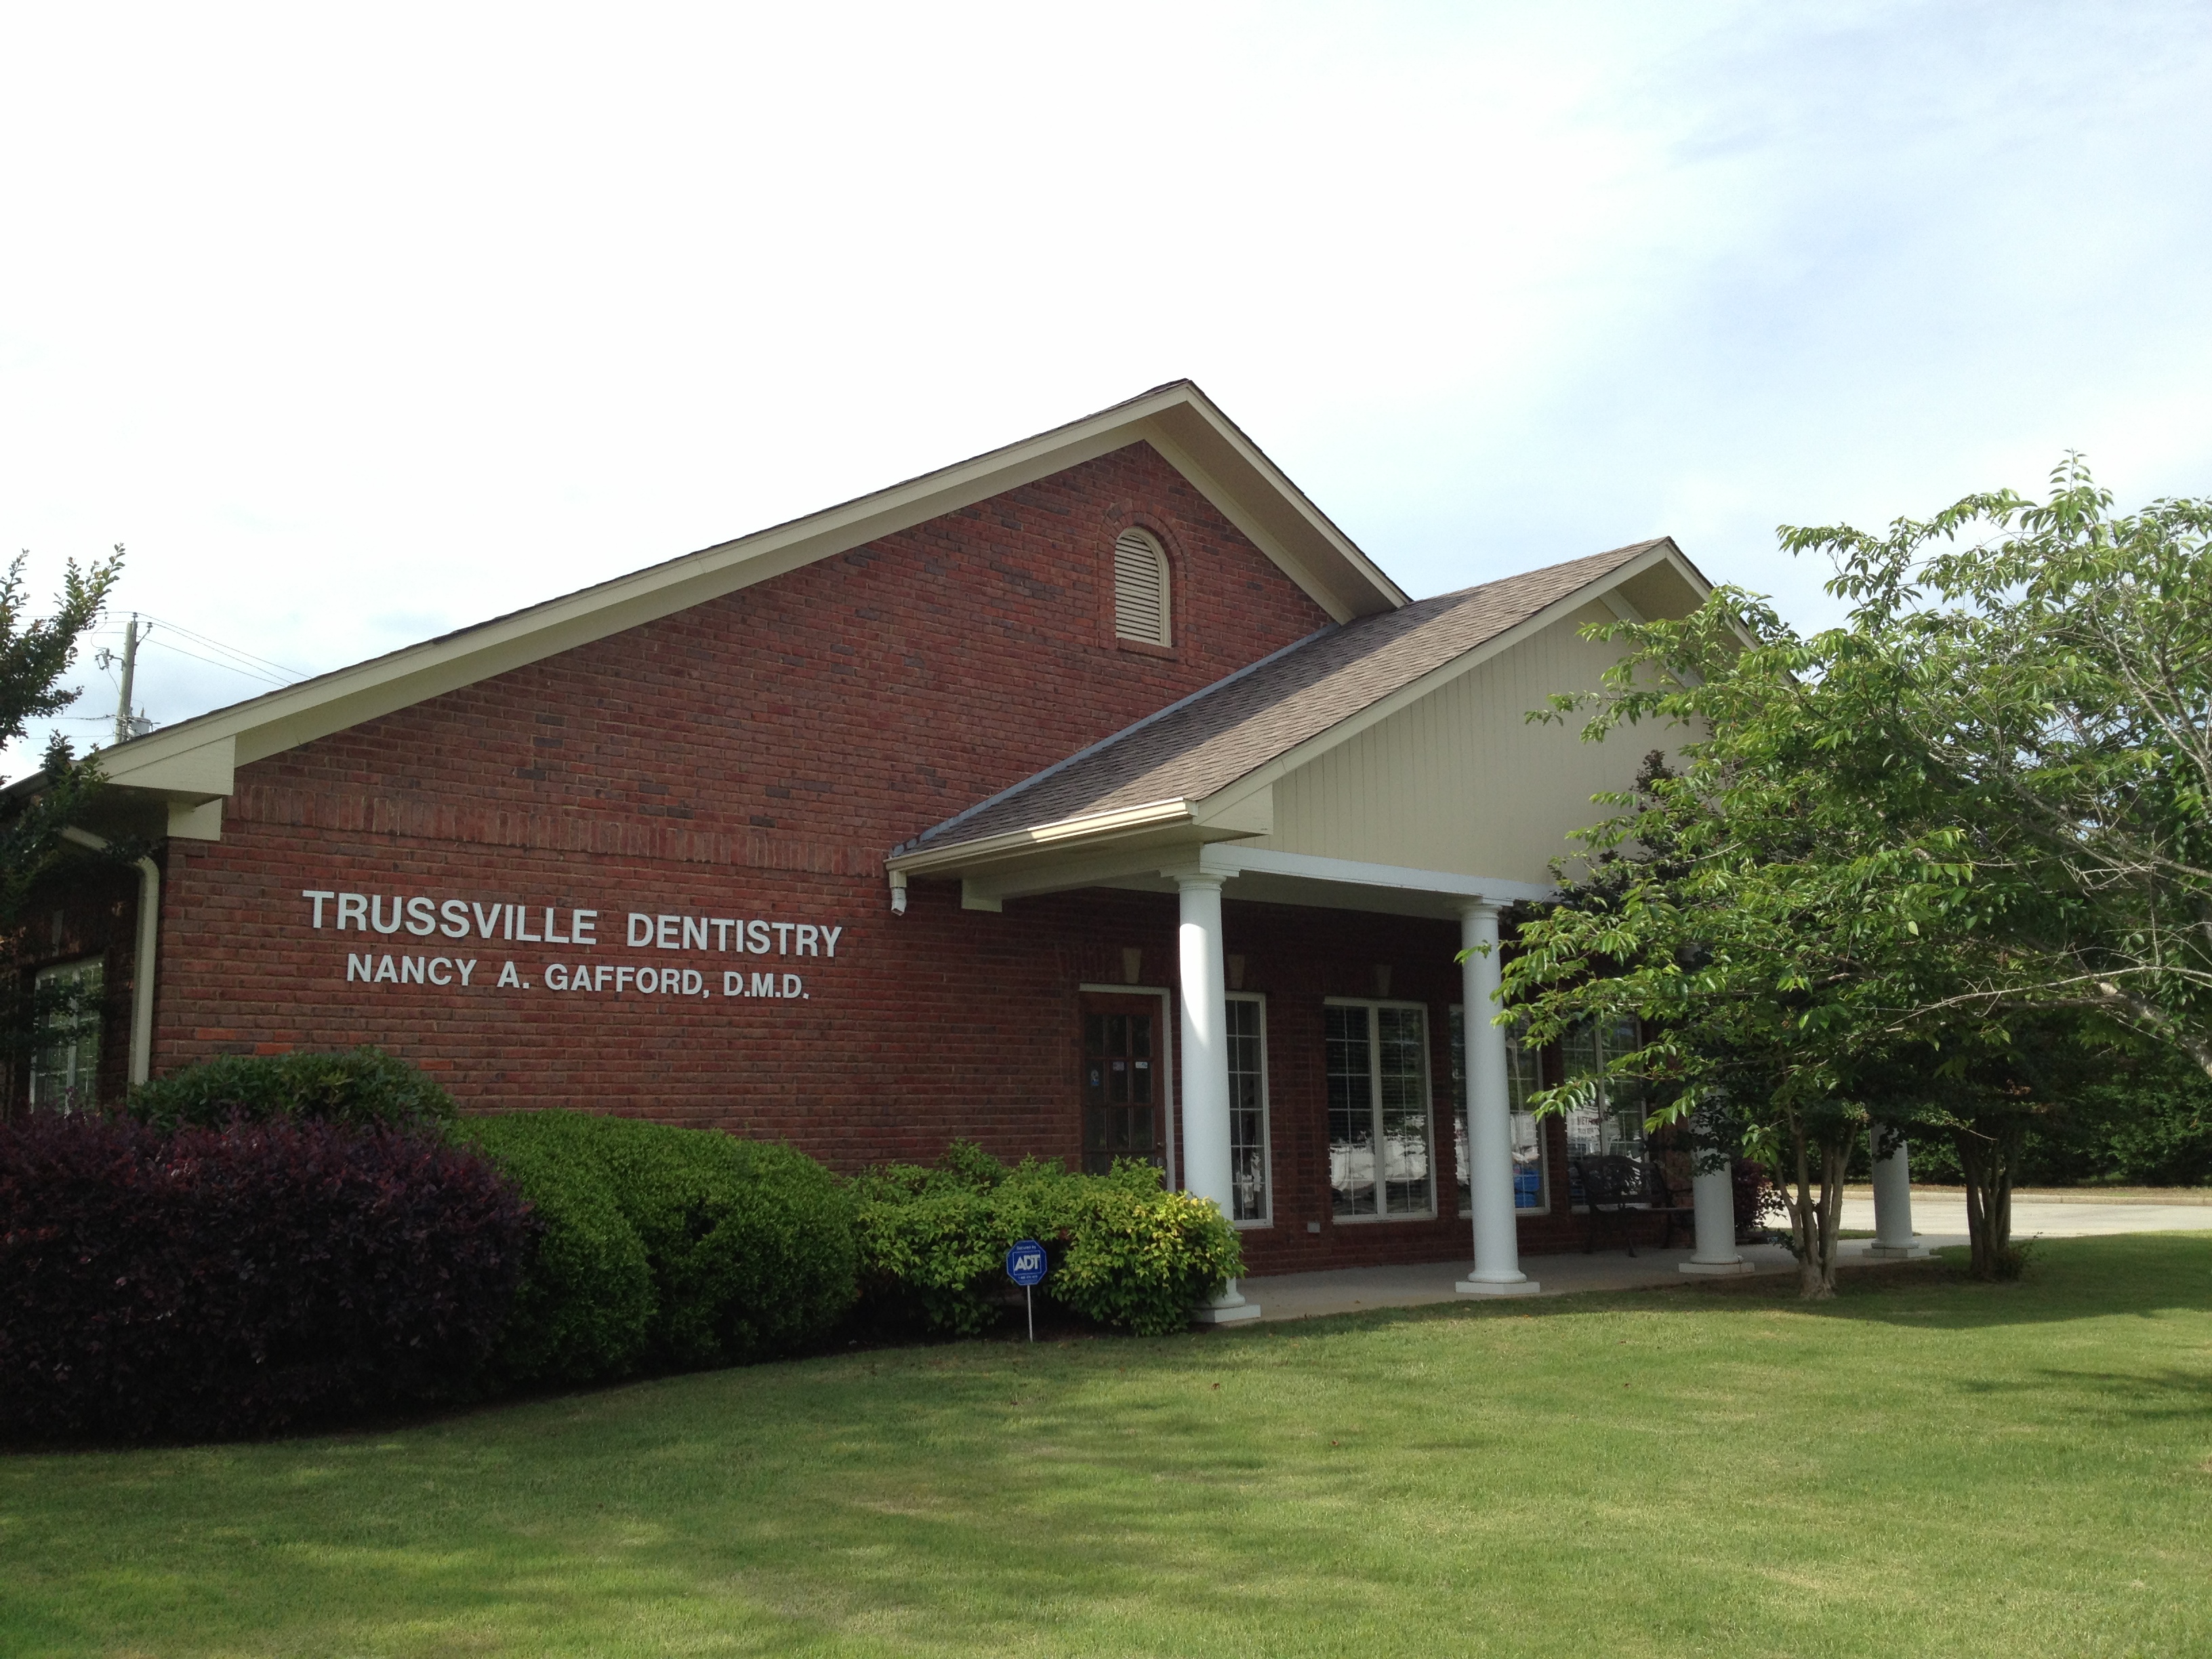 Trussville Dentistry Photo